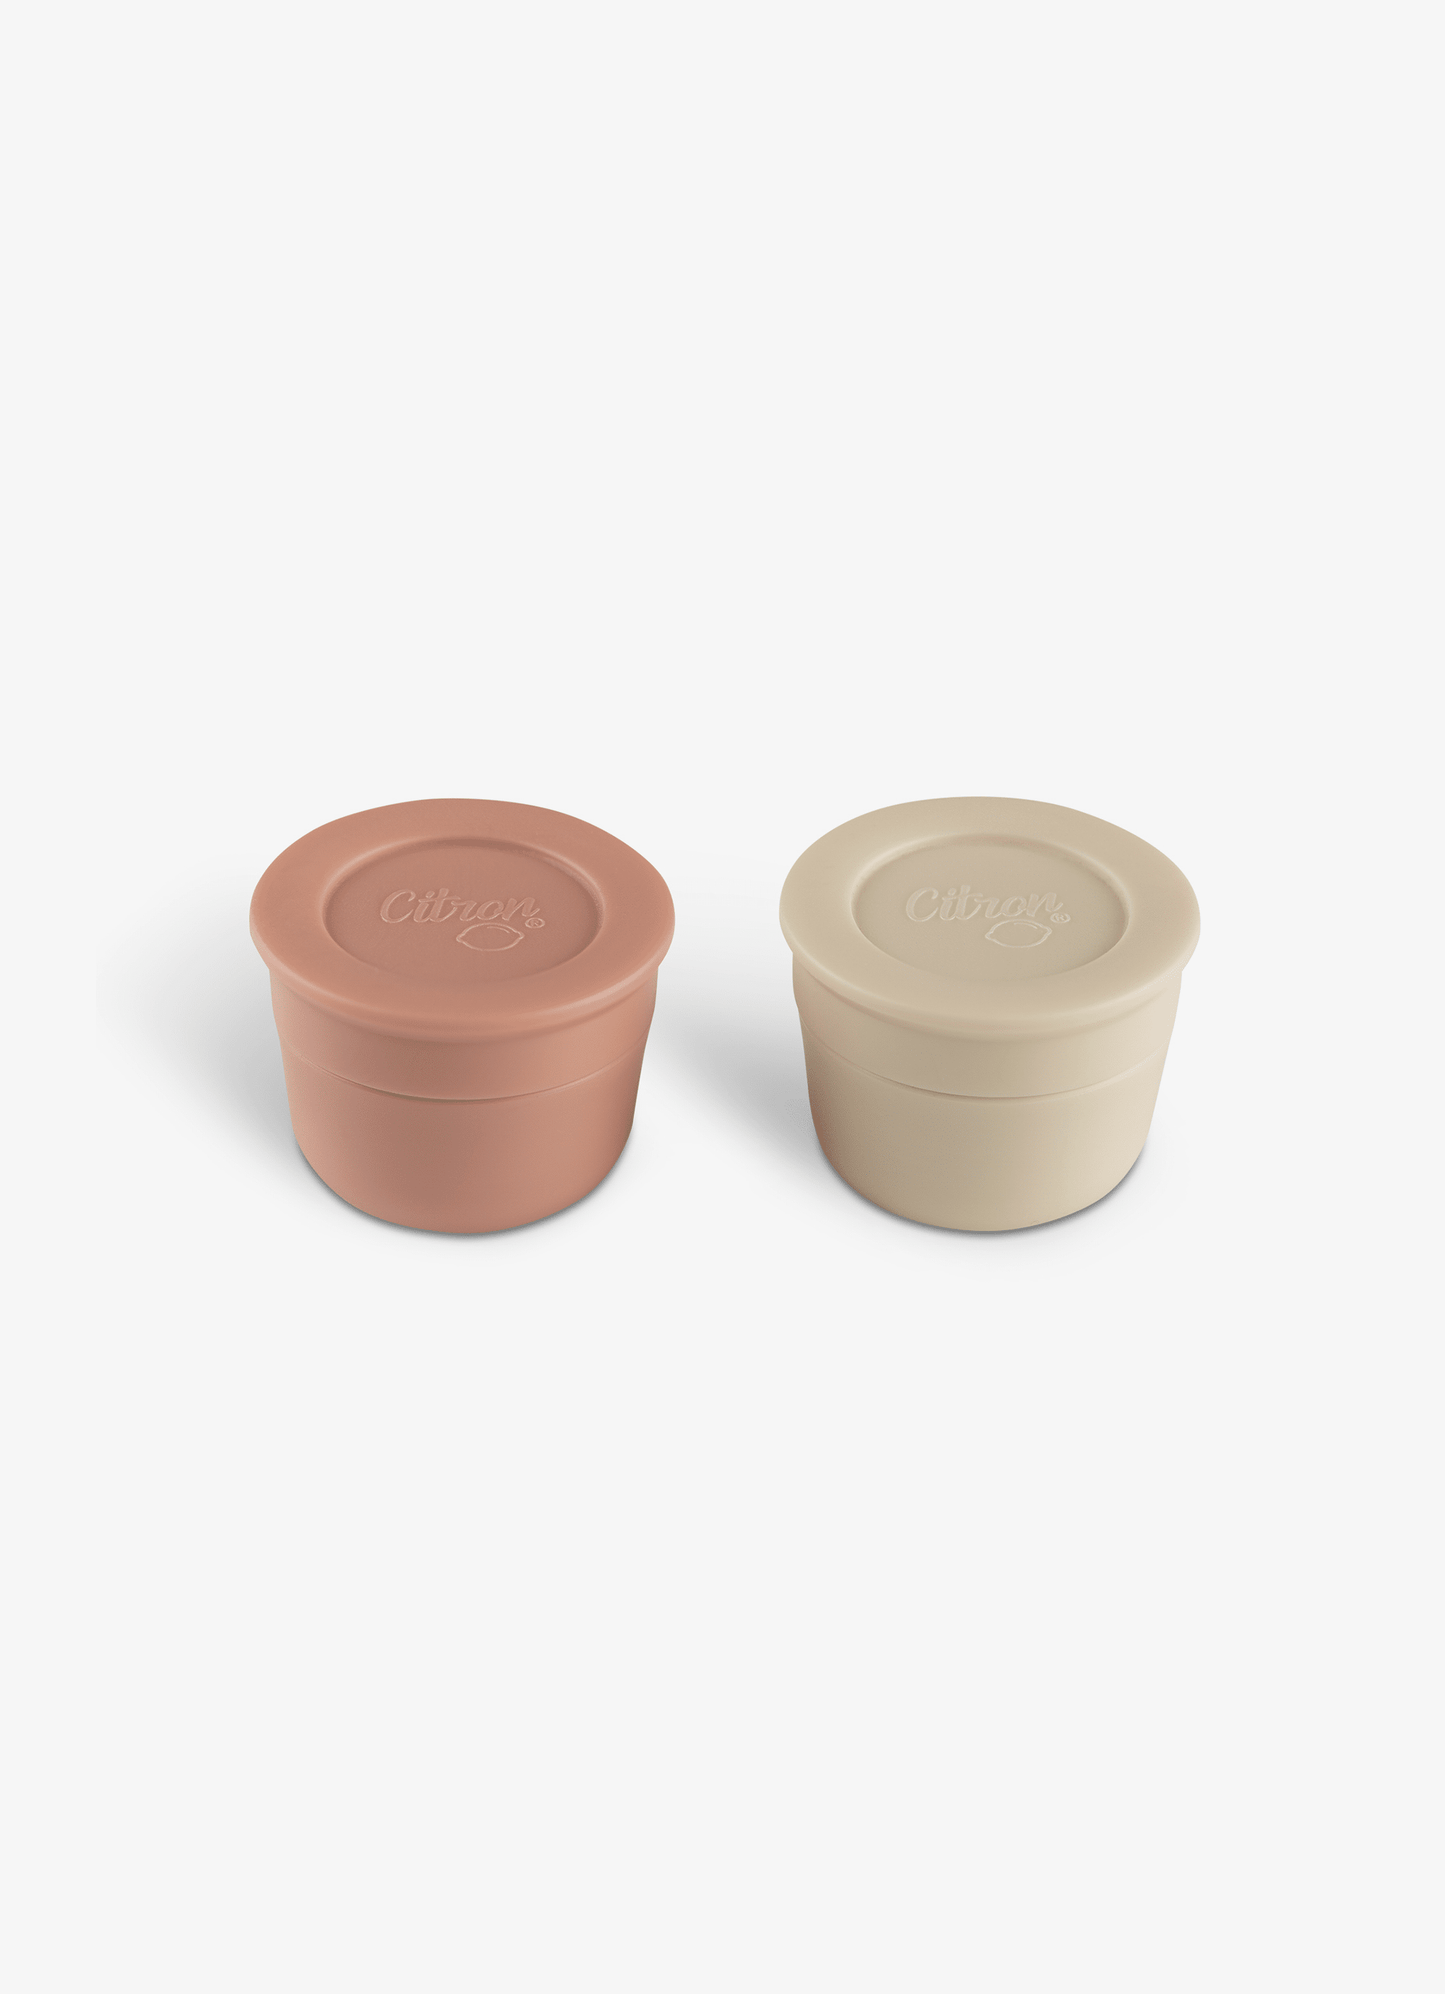 Mini Sauce Containers - Blush Pink & Cream